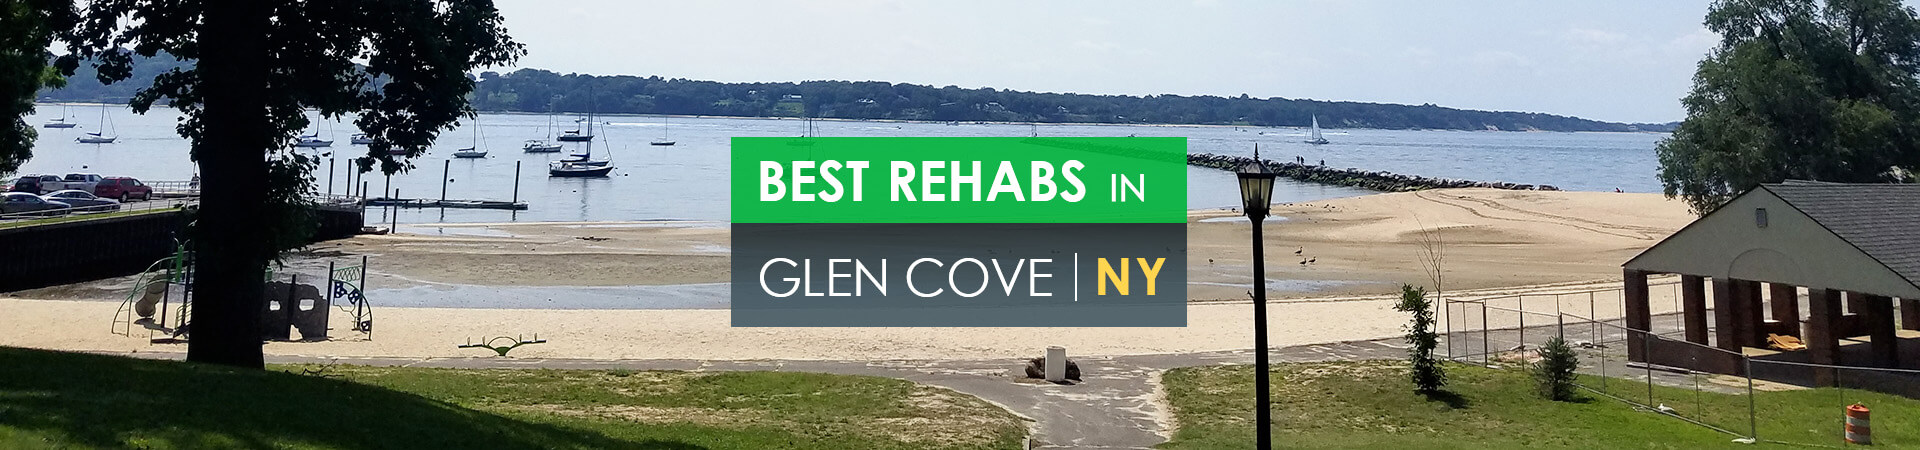 Best rehabs in Glen Cove, NY